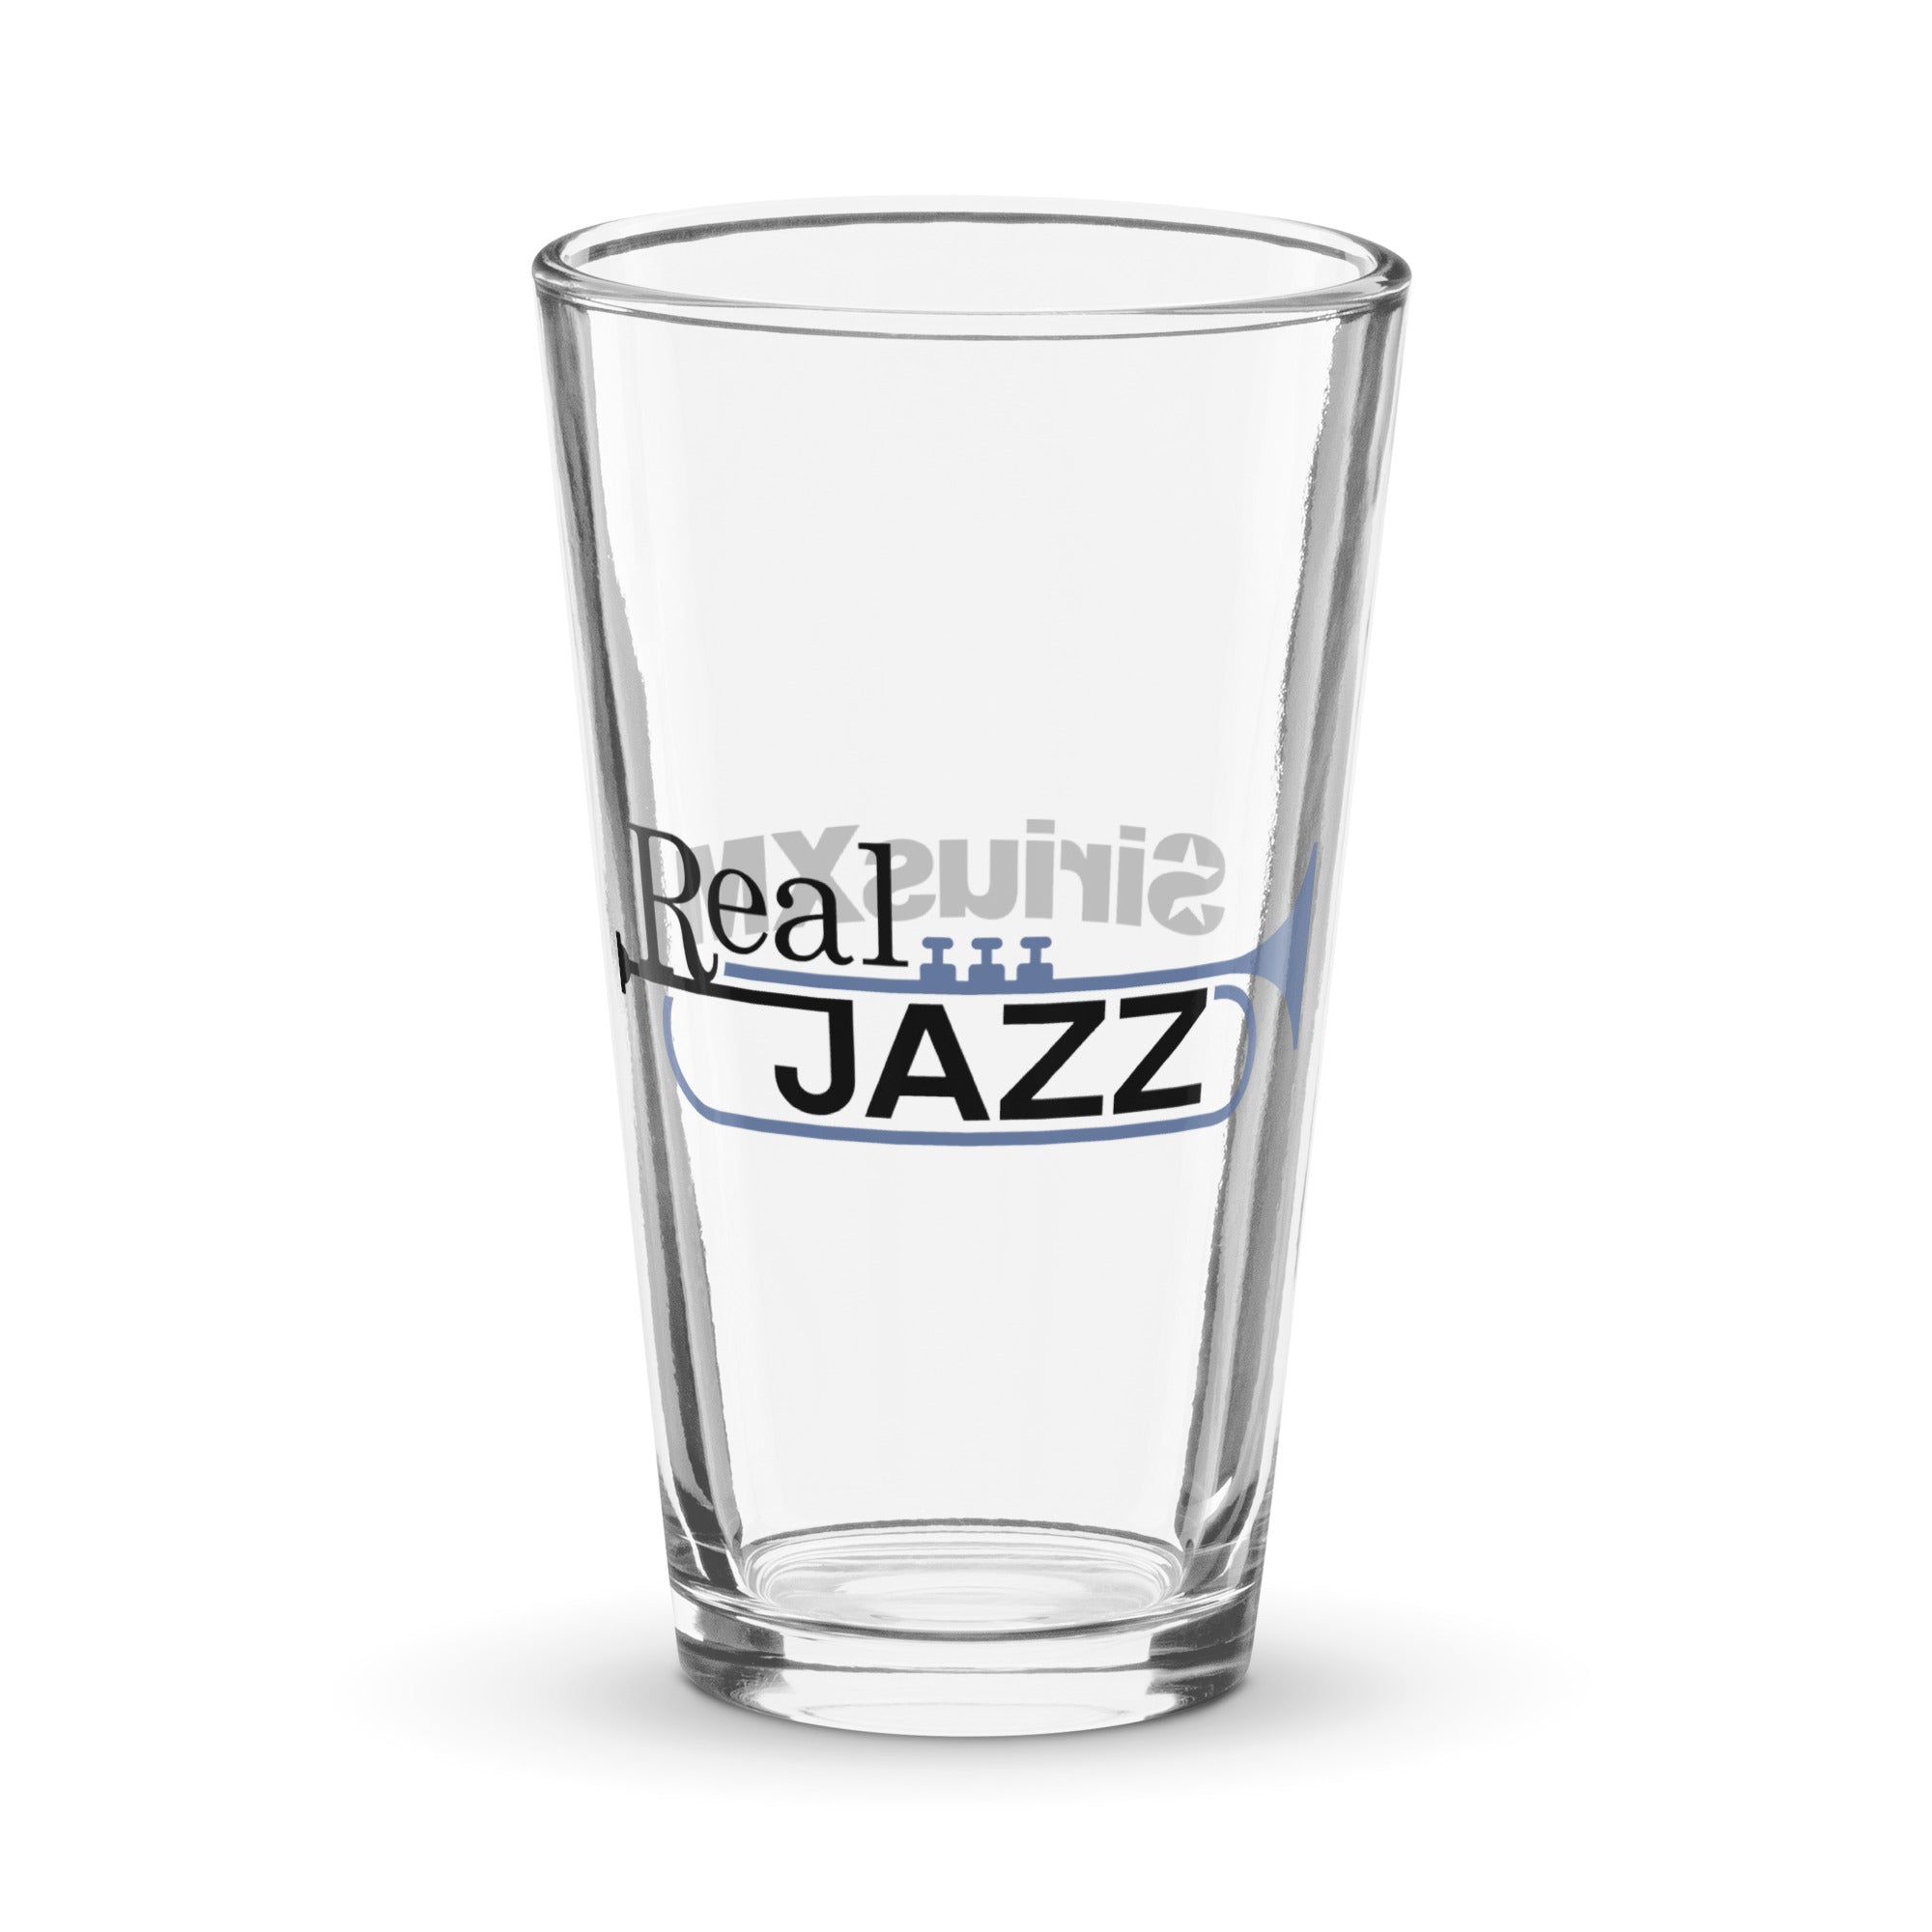 Real Jazz: Pint Glass